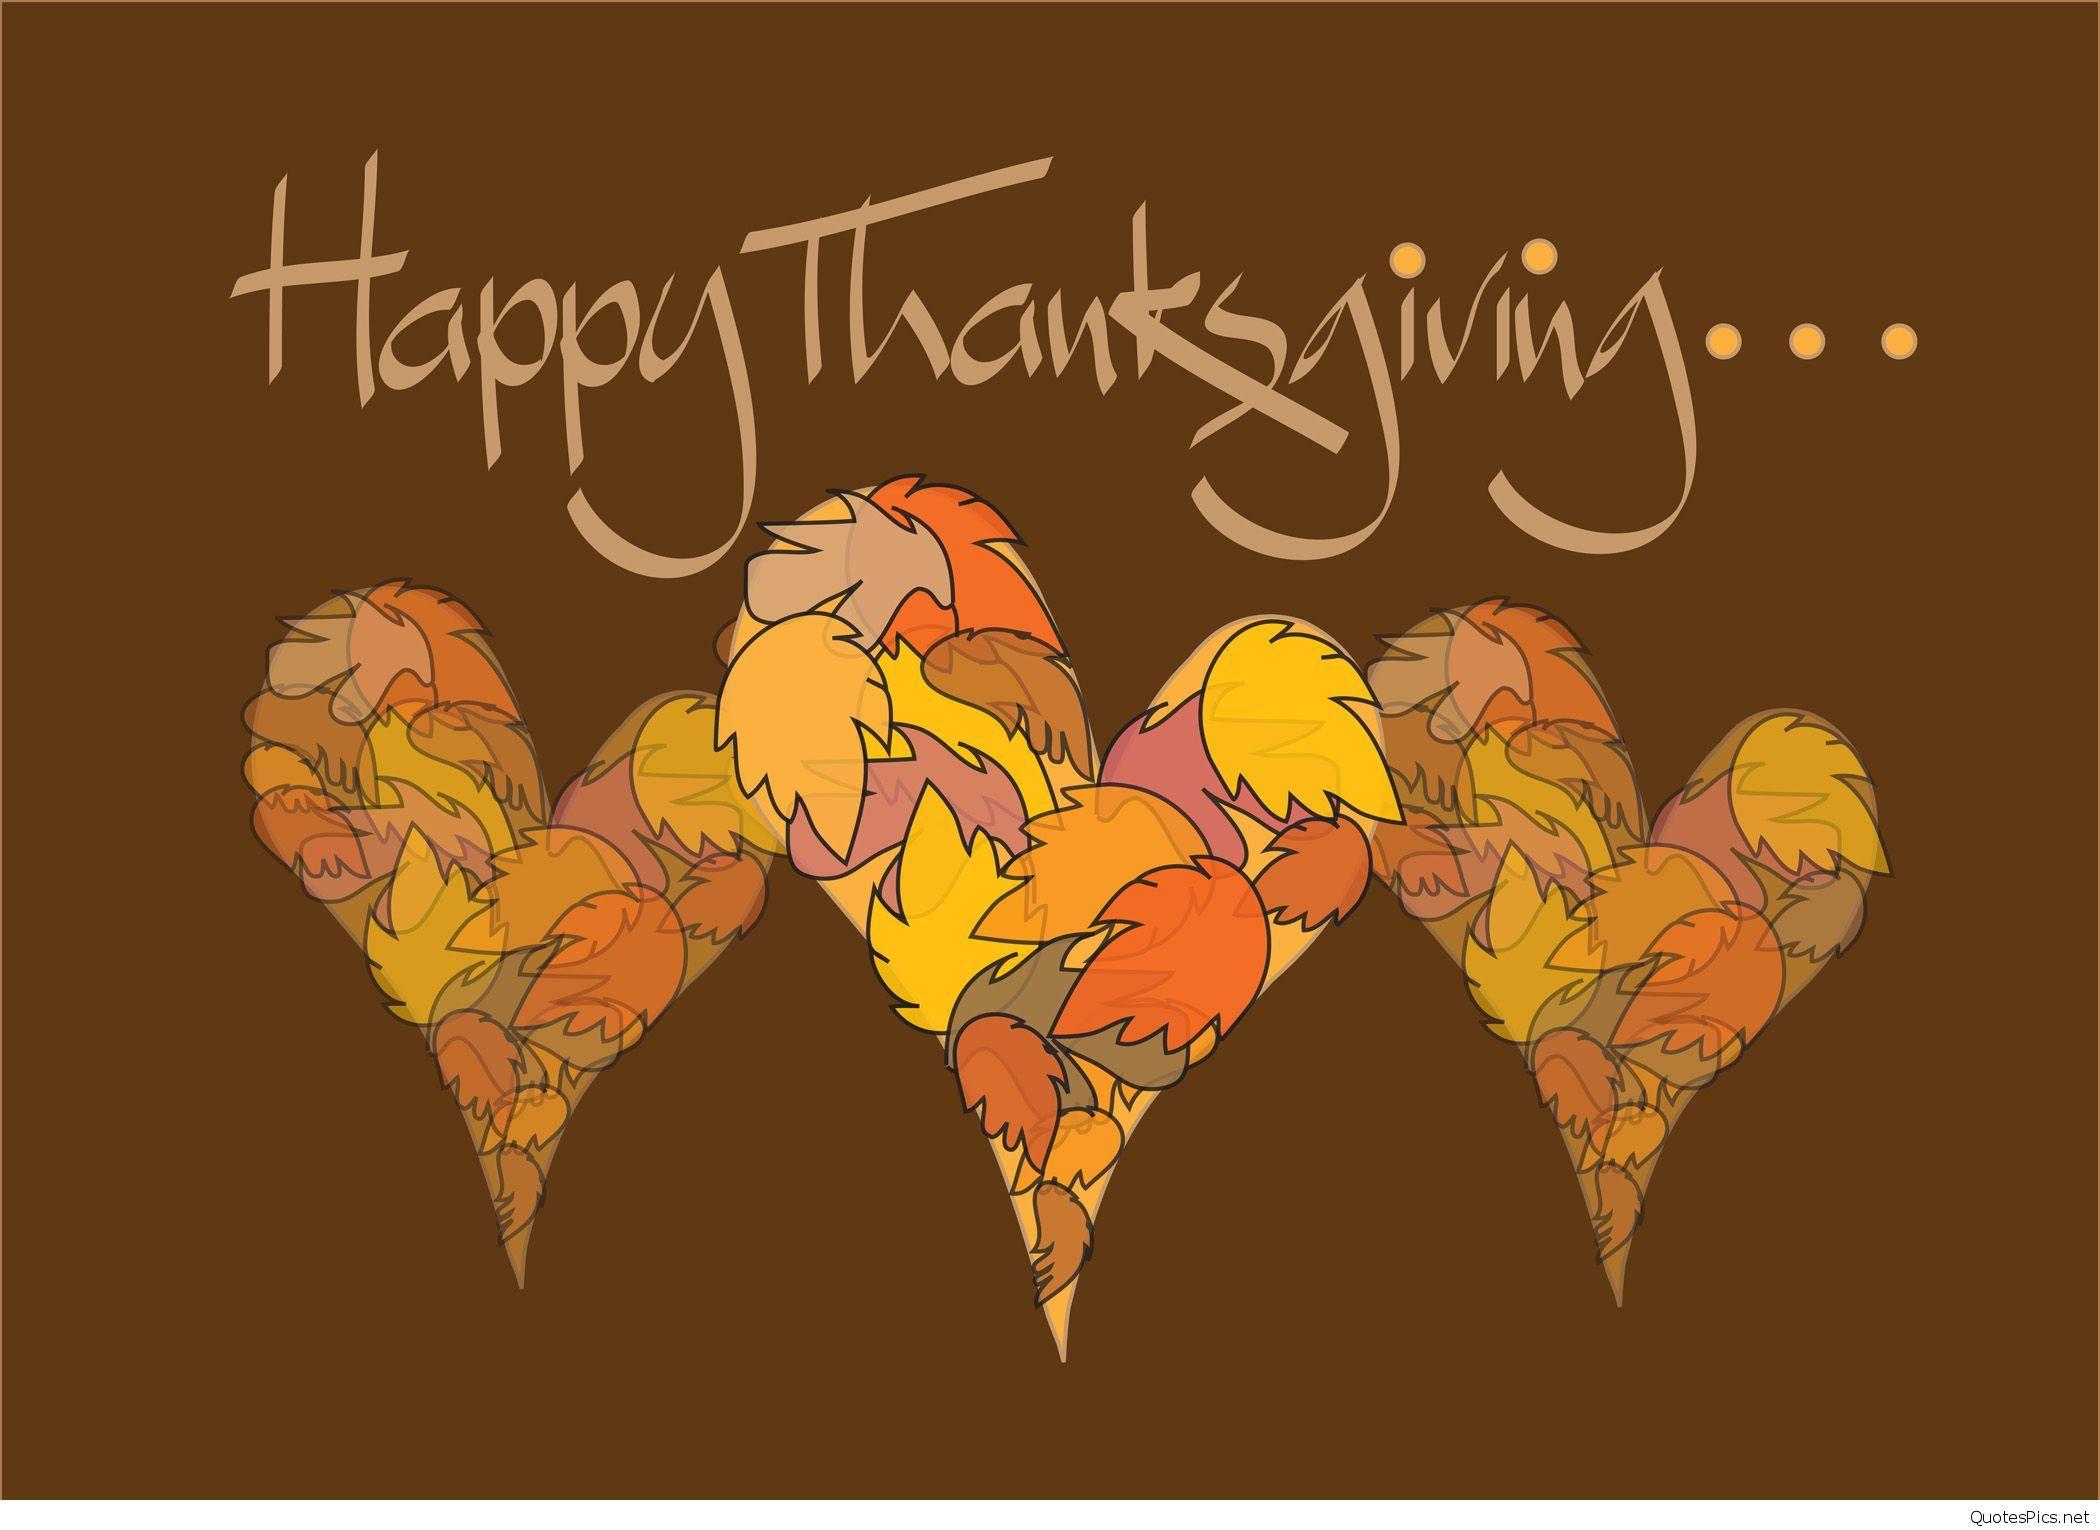 Happy Thanksgiving Wallpaper. Happy thanksgiving image